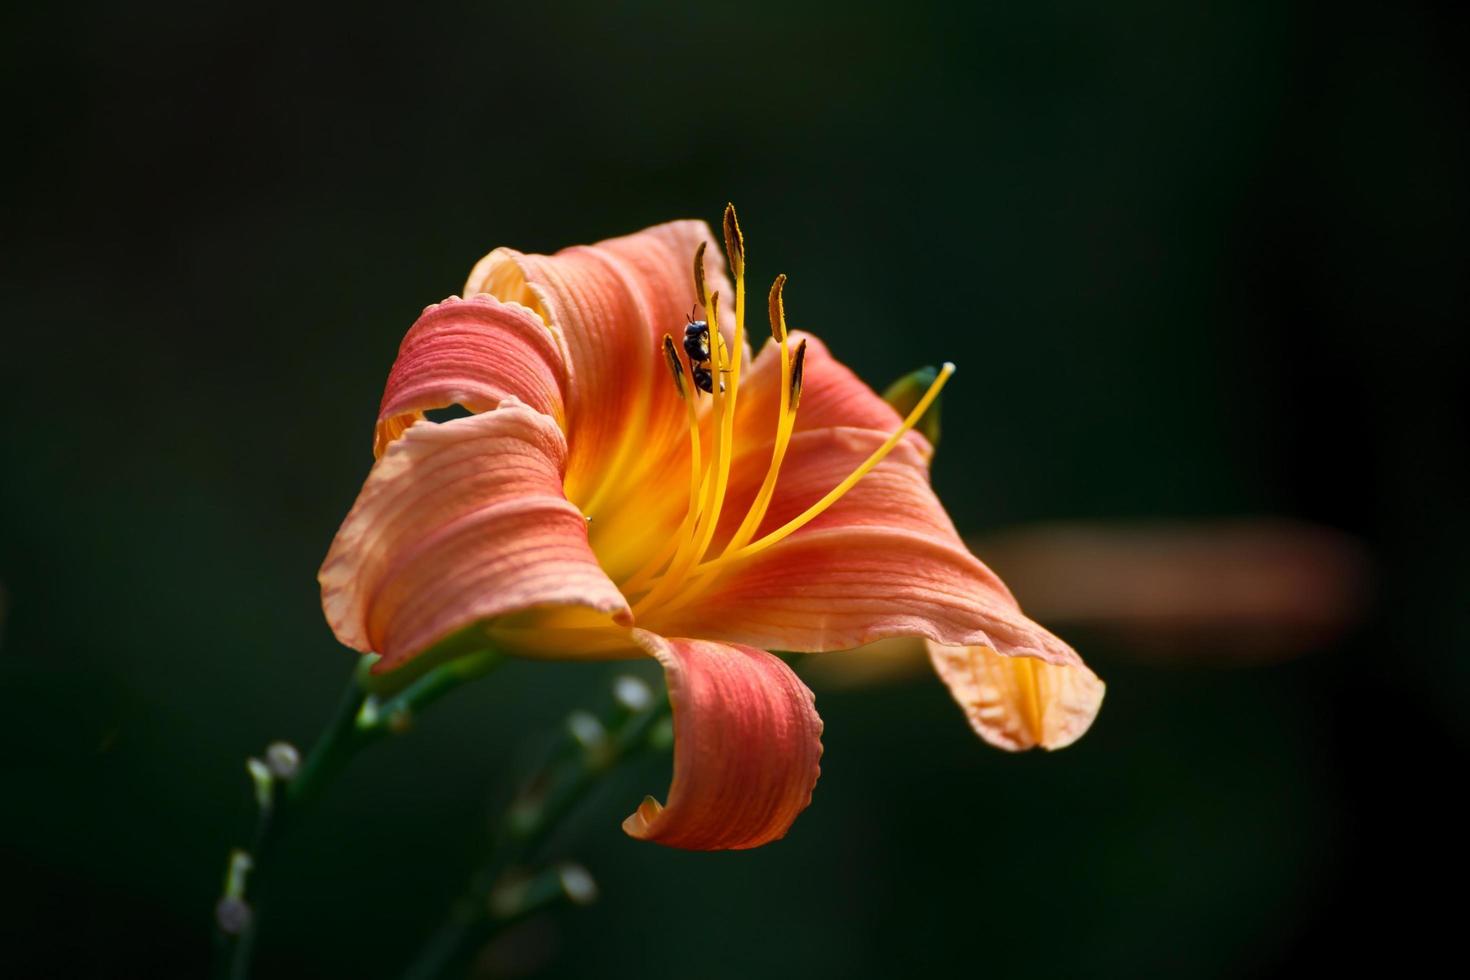 närbild bi samla pollen från lilja blomma foto